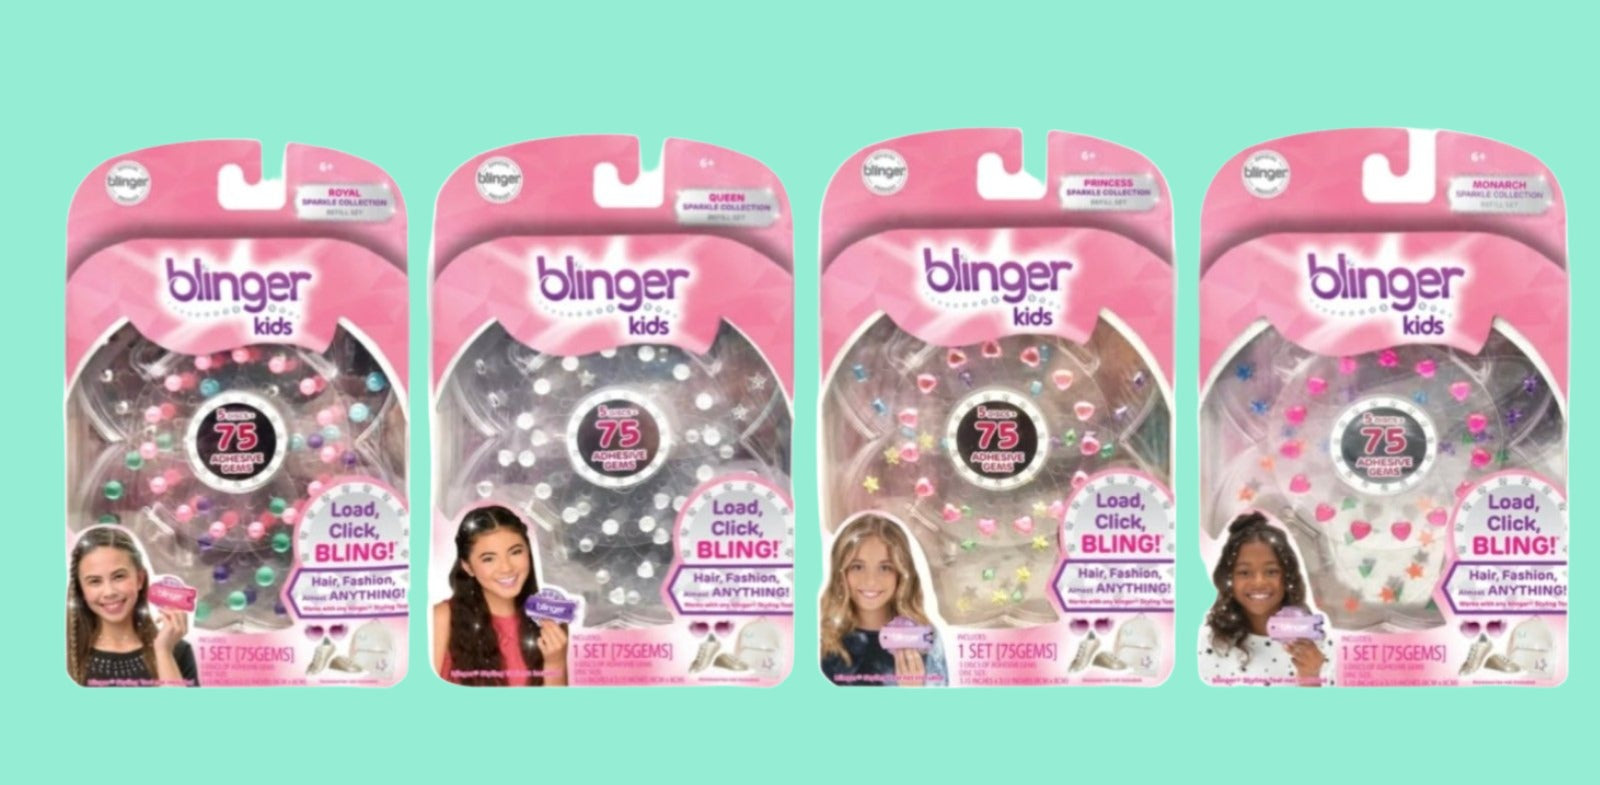 Blinger Hair Gems Dazzling Gem Refill Kits - 4 Choices | HONEYPIEKIDS Royal